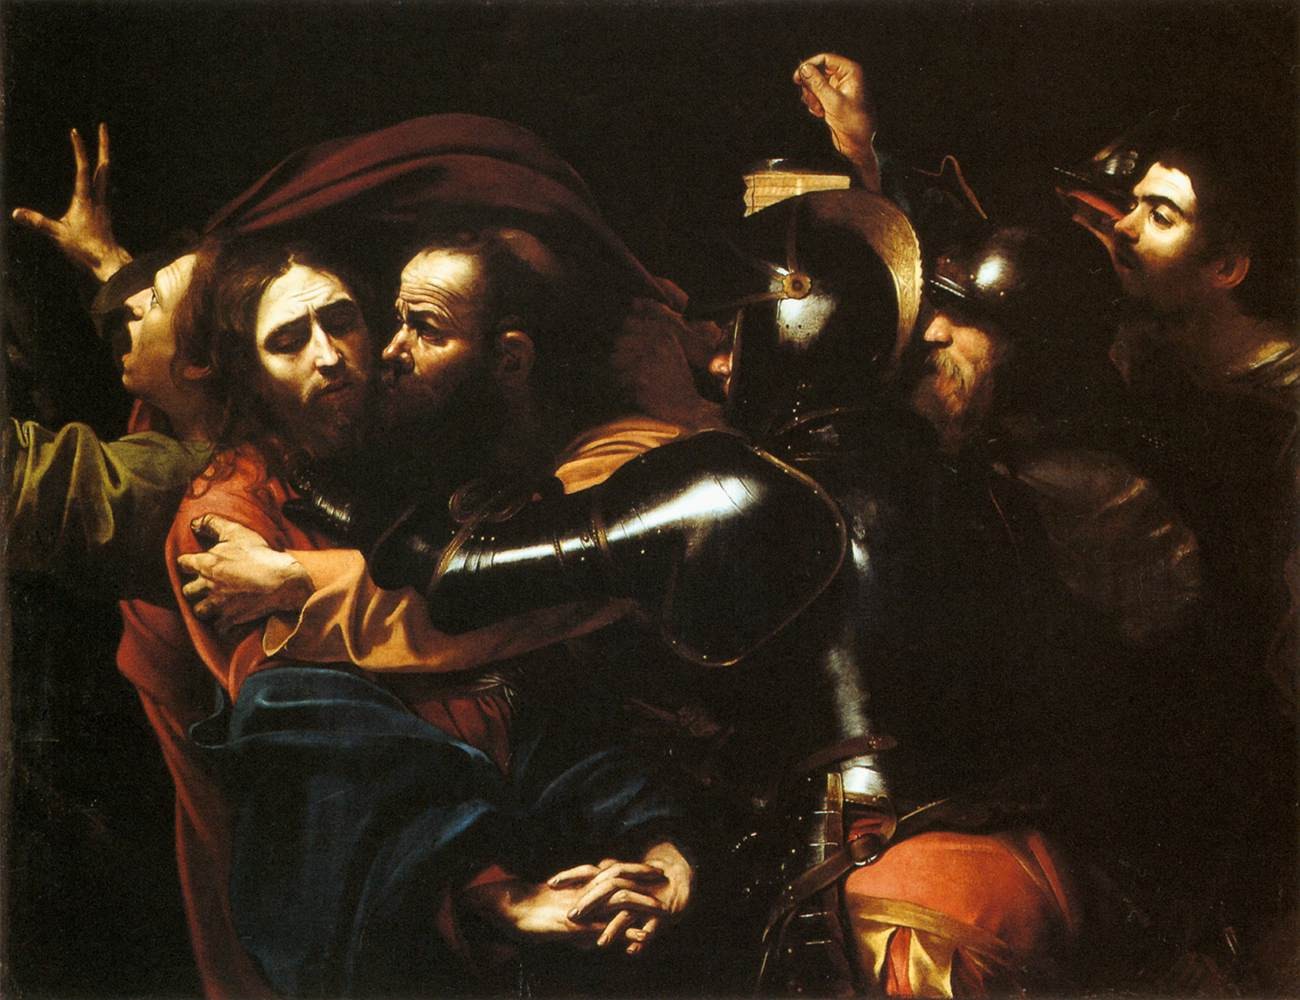 People 1300x1000 Jesus Christ painting classic art Caravaggio